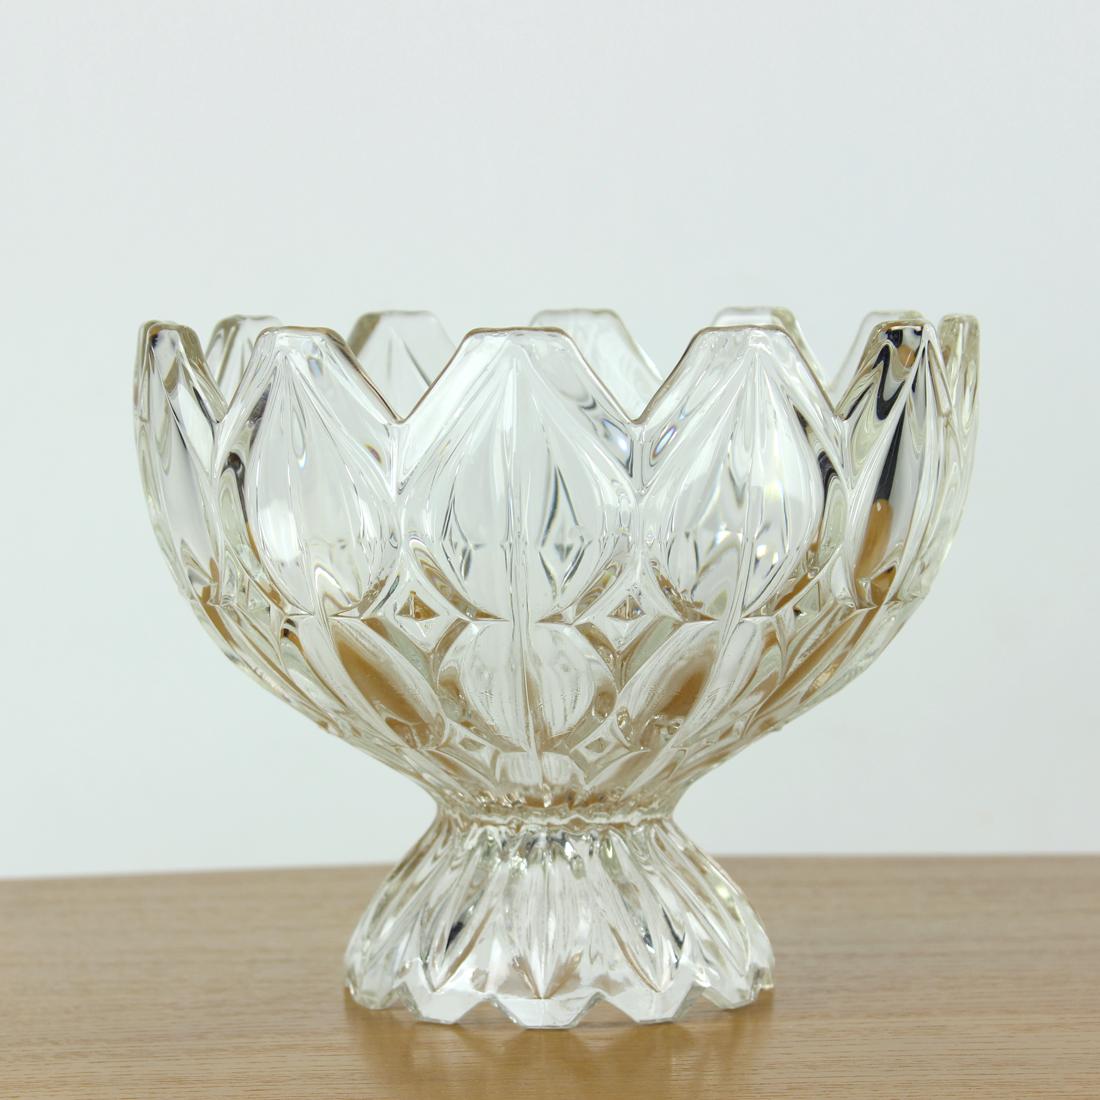 Czech Unique Pressed Glass Bowl, Tulip Collection Hermanowa Hut, 1957 For Sale